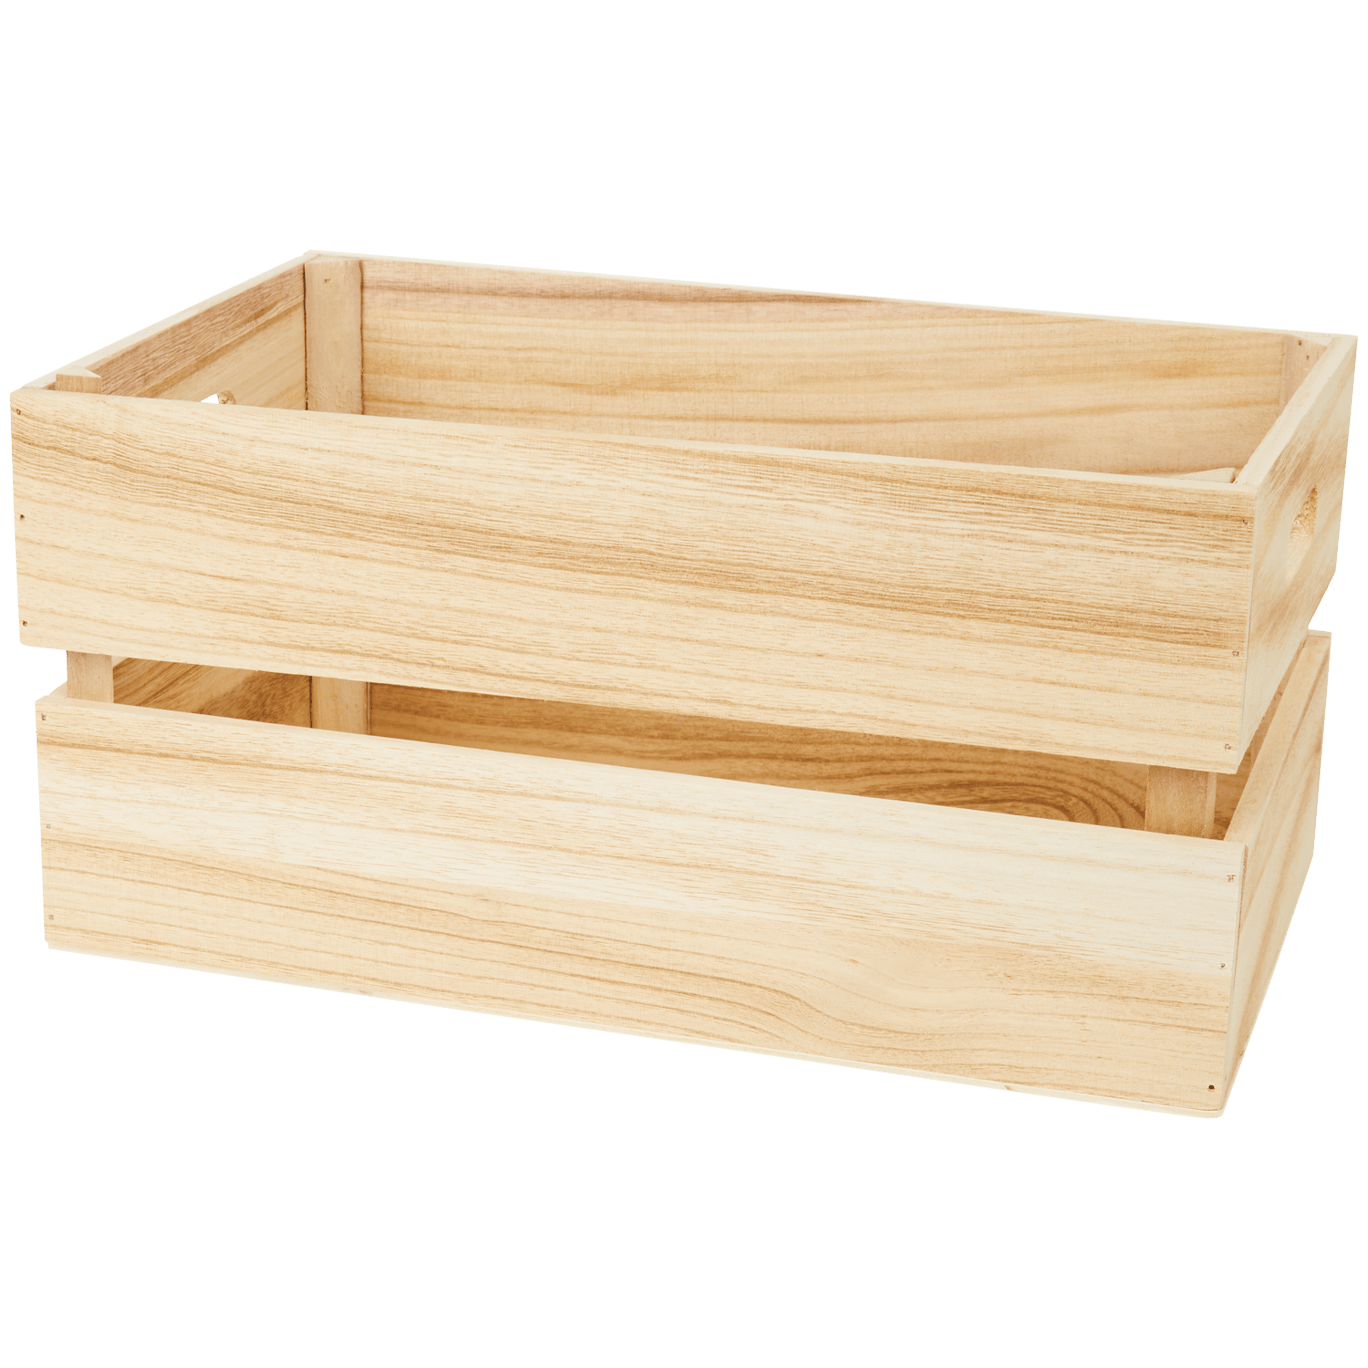 Caja de madera grande